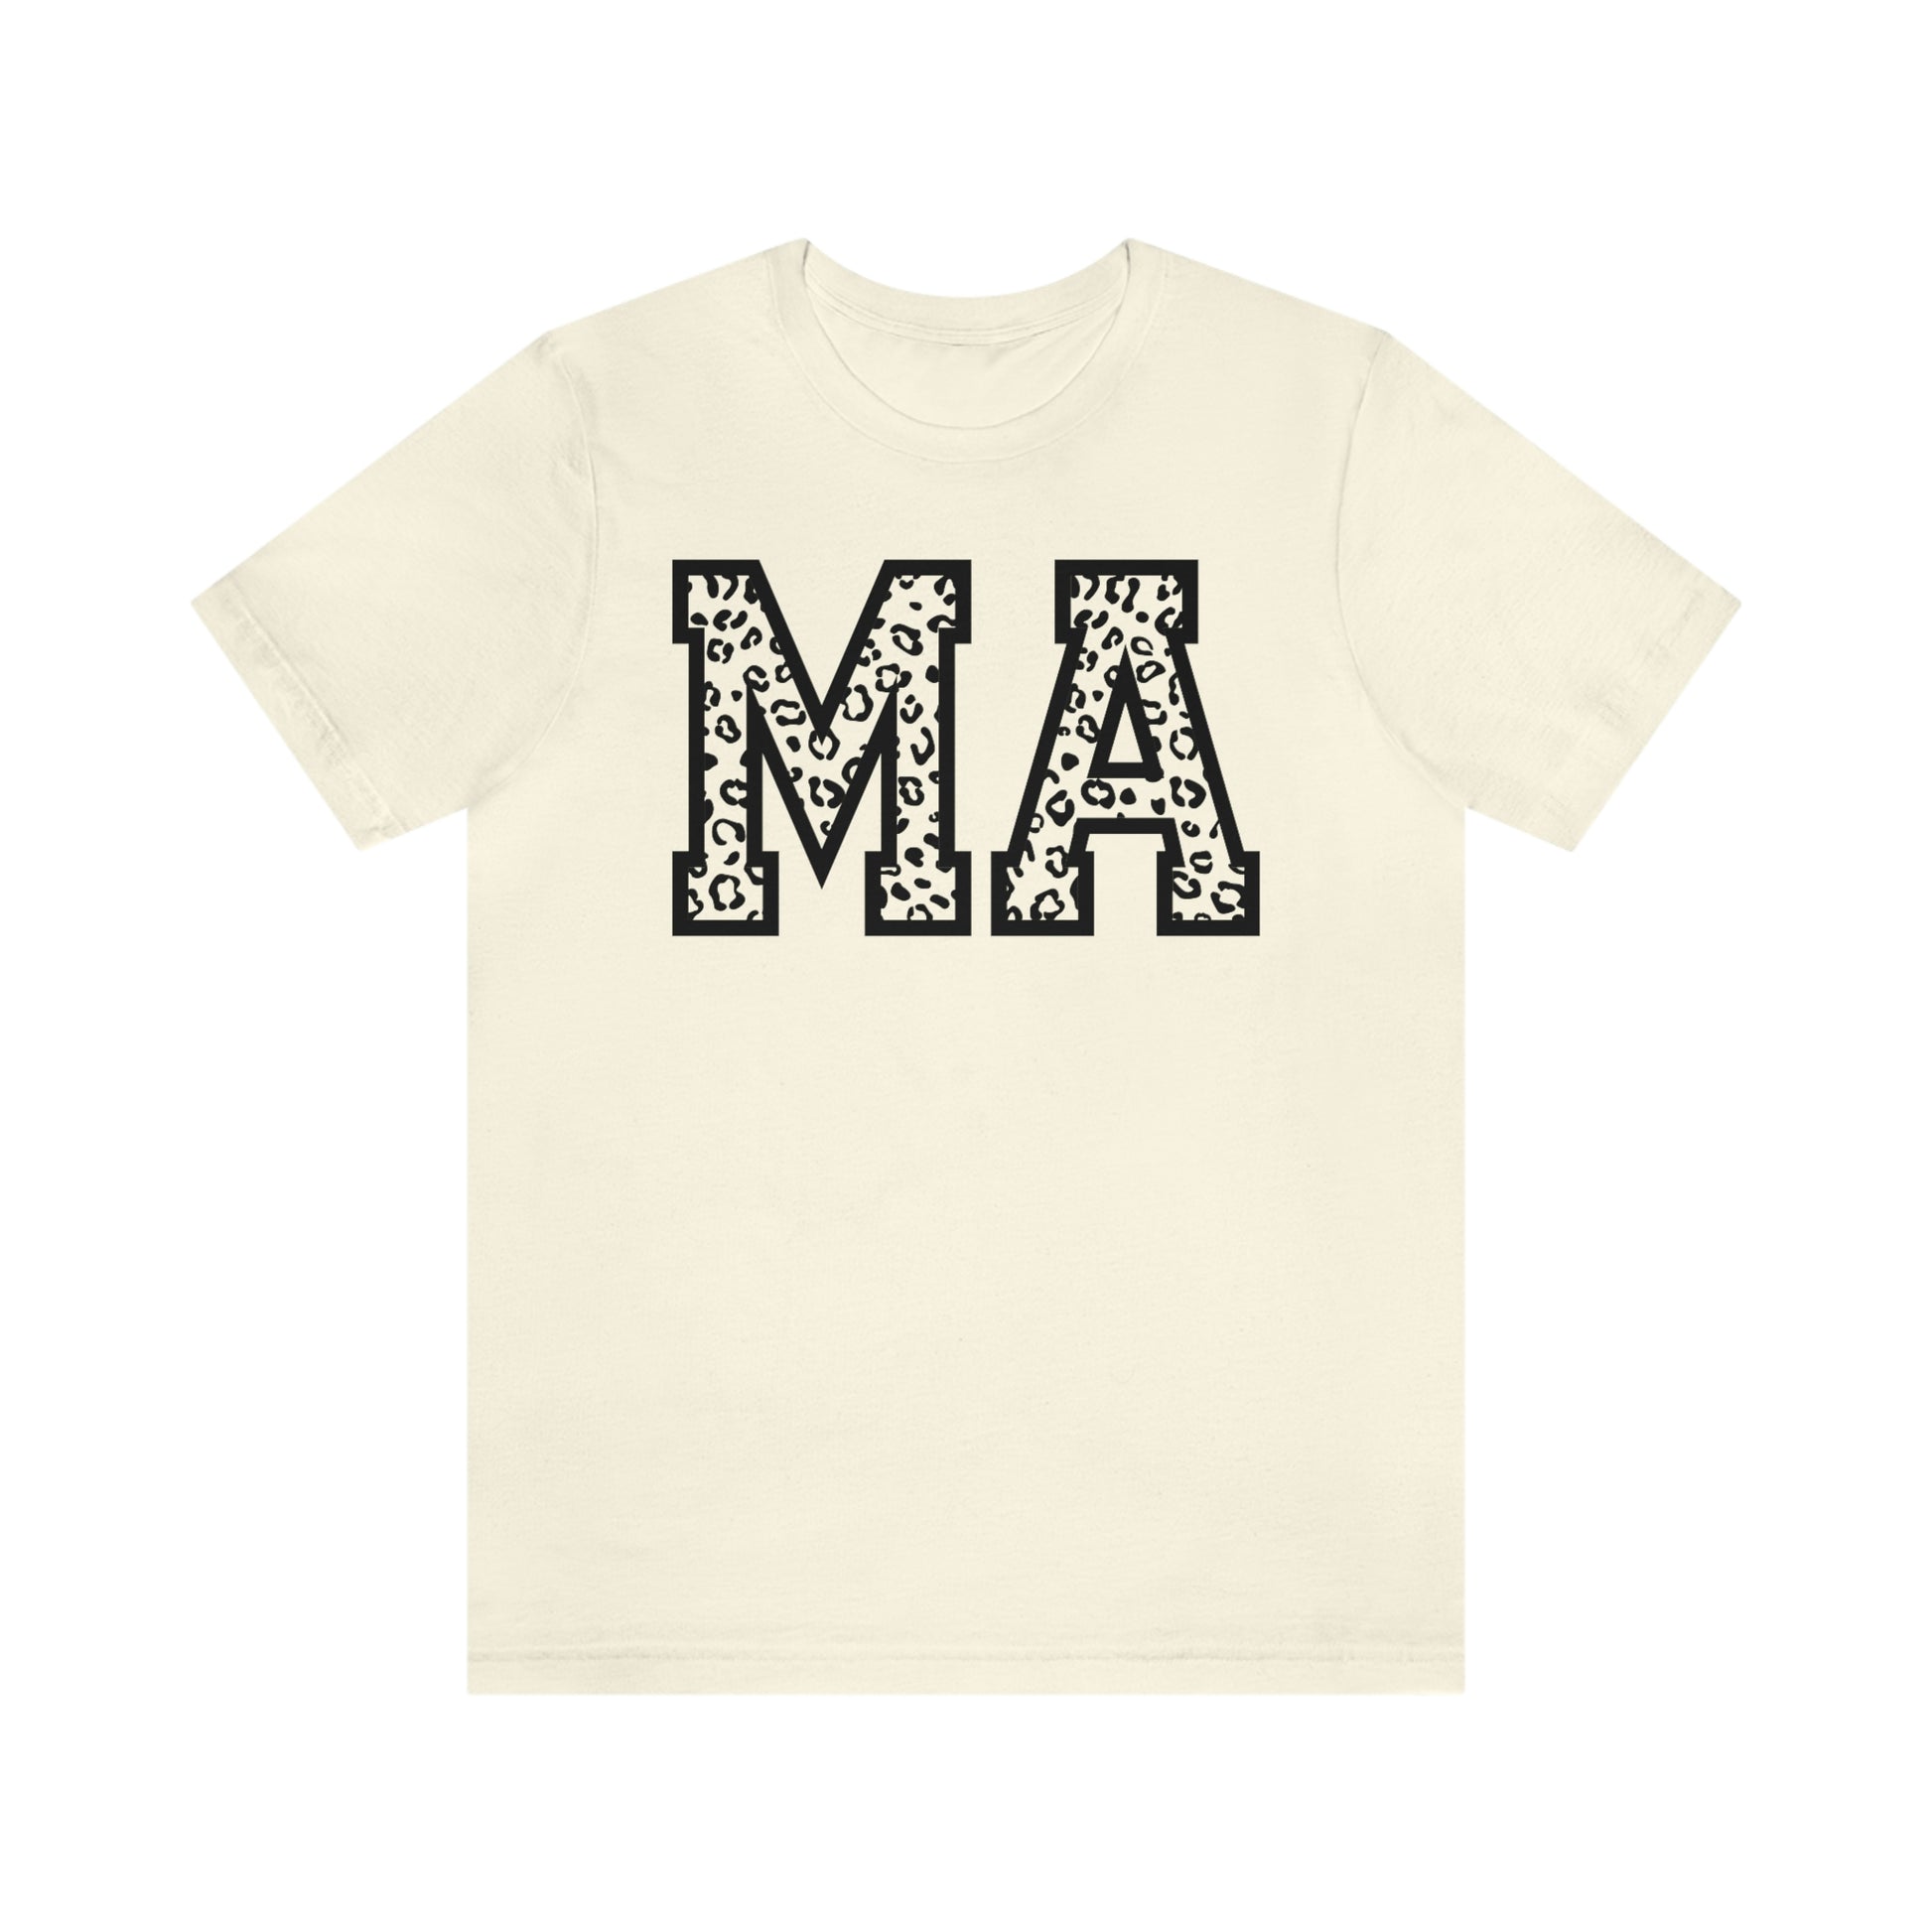 Massachusetts MA Leopard Print Letters Short Sleeve T-shirt